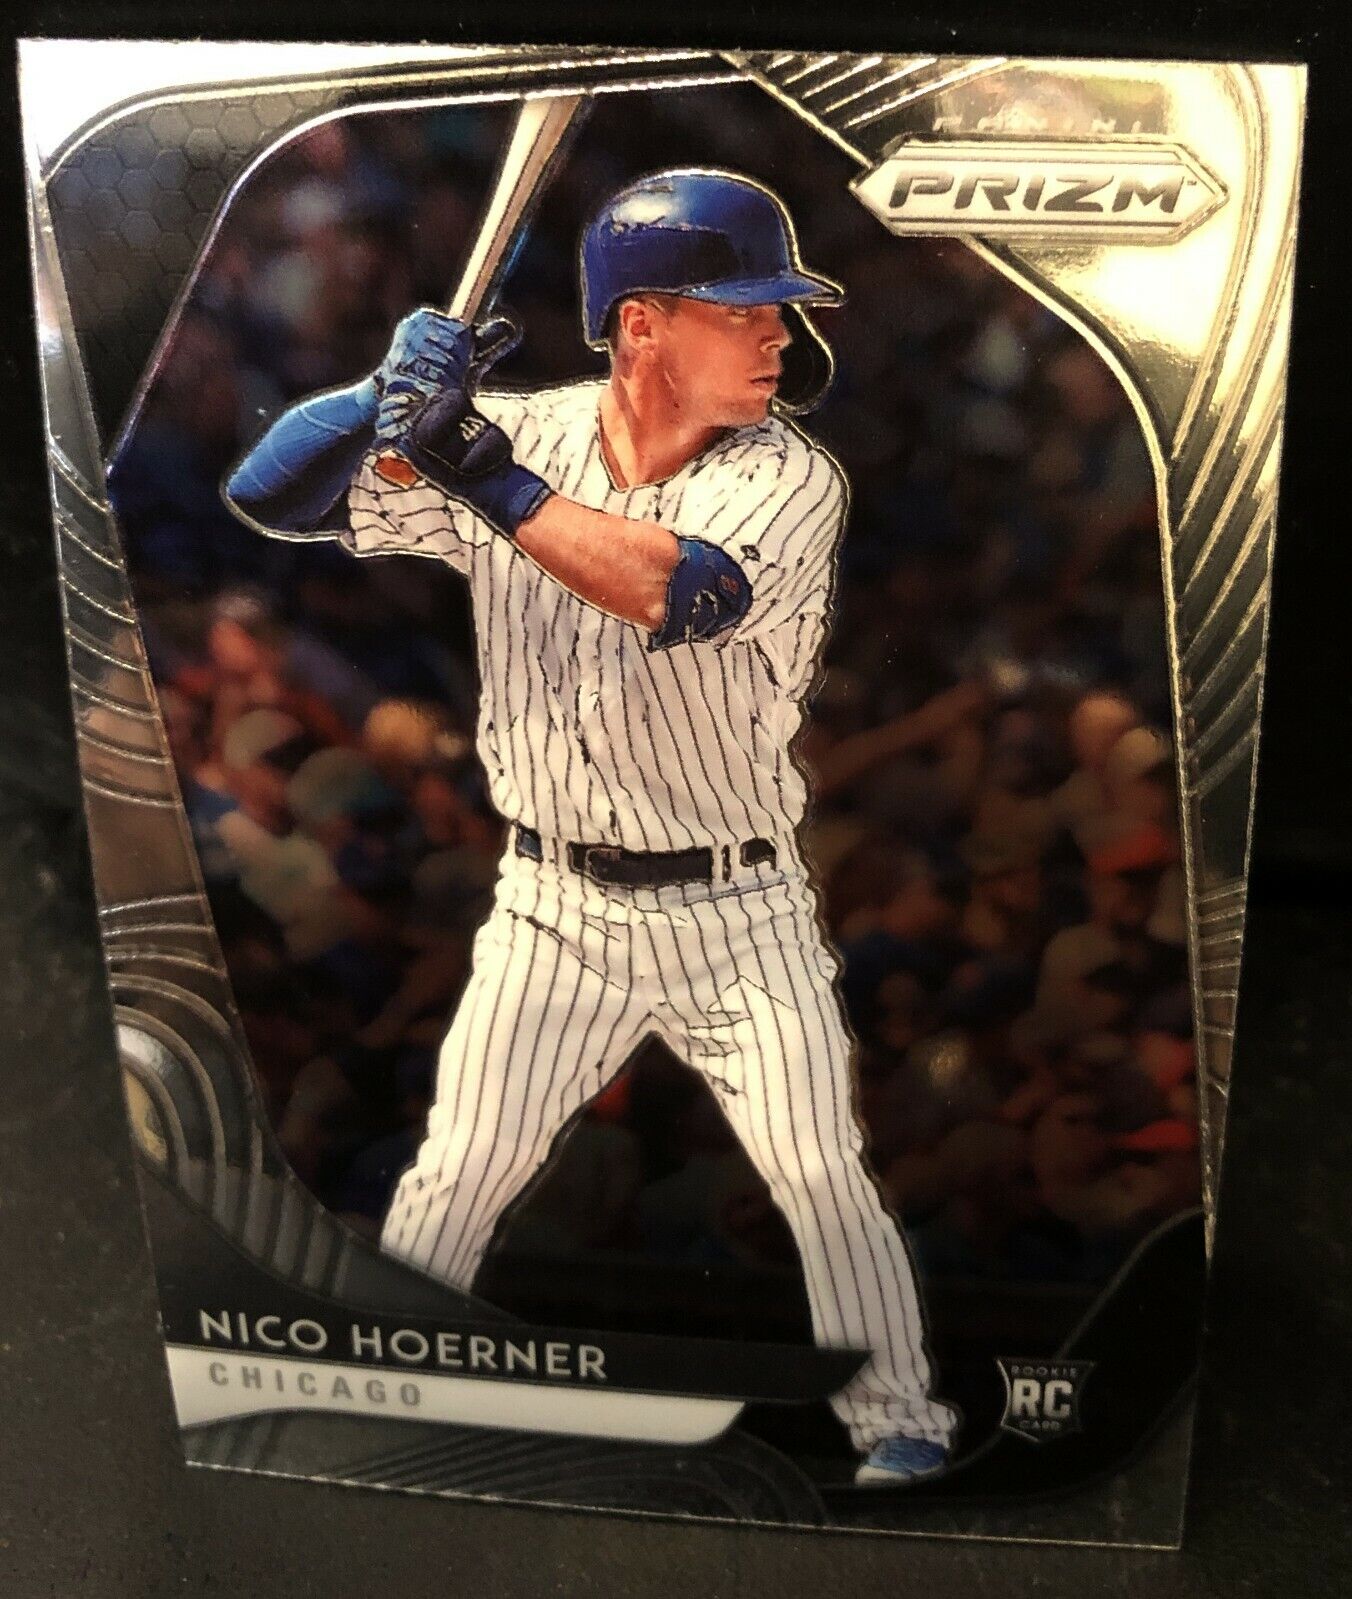 Nico Hoerner(Chicago Cubs)2020 Panini Prizm Base Rookie Baseball Card